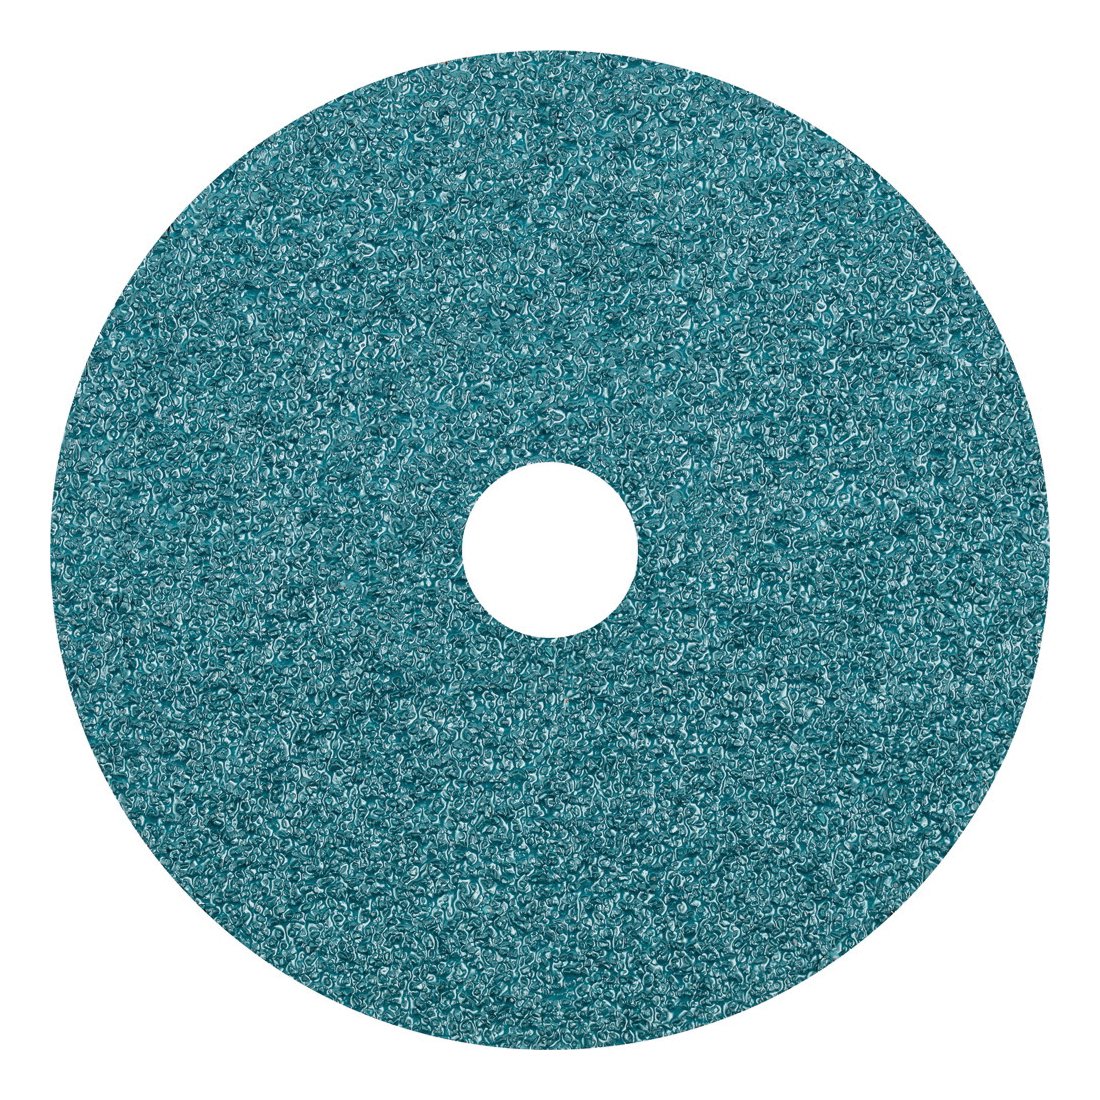 PFERD 62522 Standard Coated Abrasive Disc, 5 in Dia, 7/8 in Center Hole, 24 Grit, Zirconia Alumina Abrasive, Arbor Attachment